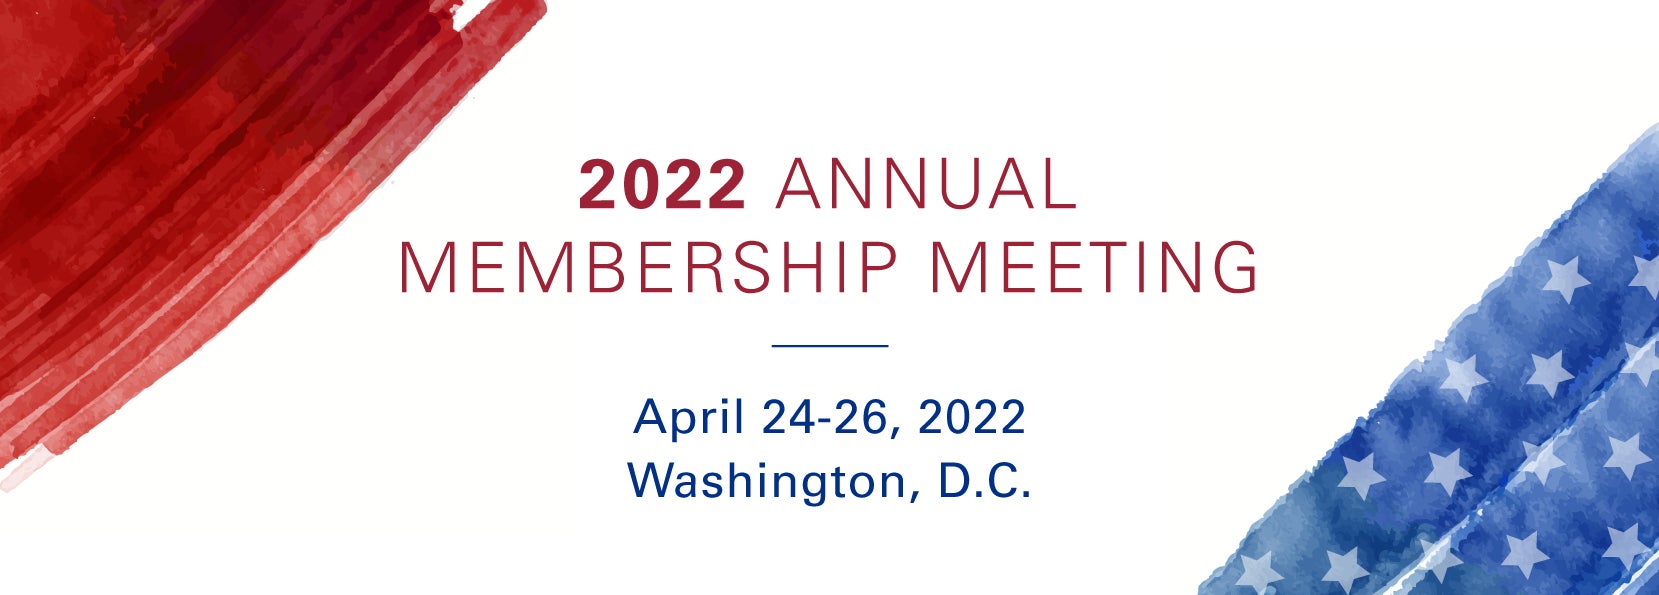 American Hospital Association 2022 Annual Membership Meeting. April 24-26, 2022. Washington, D.C.